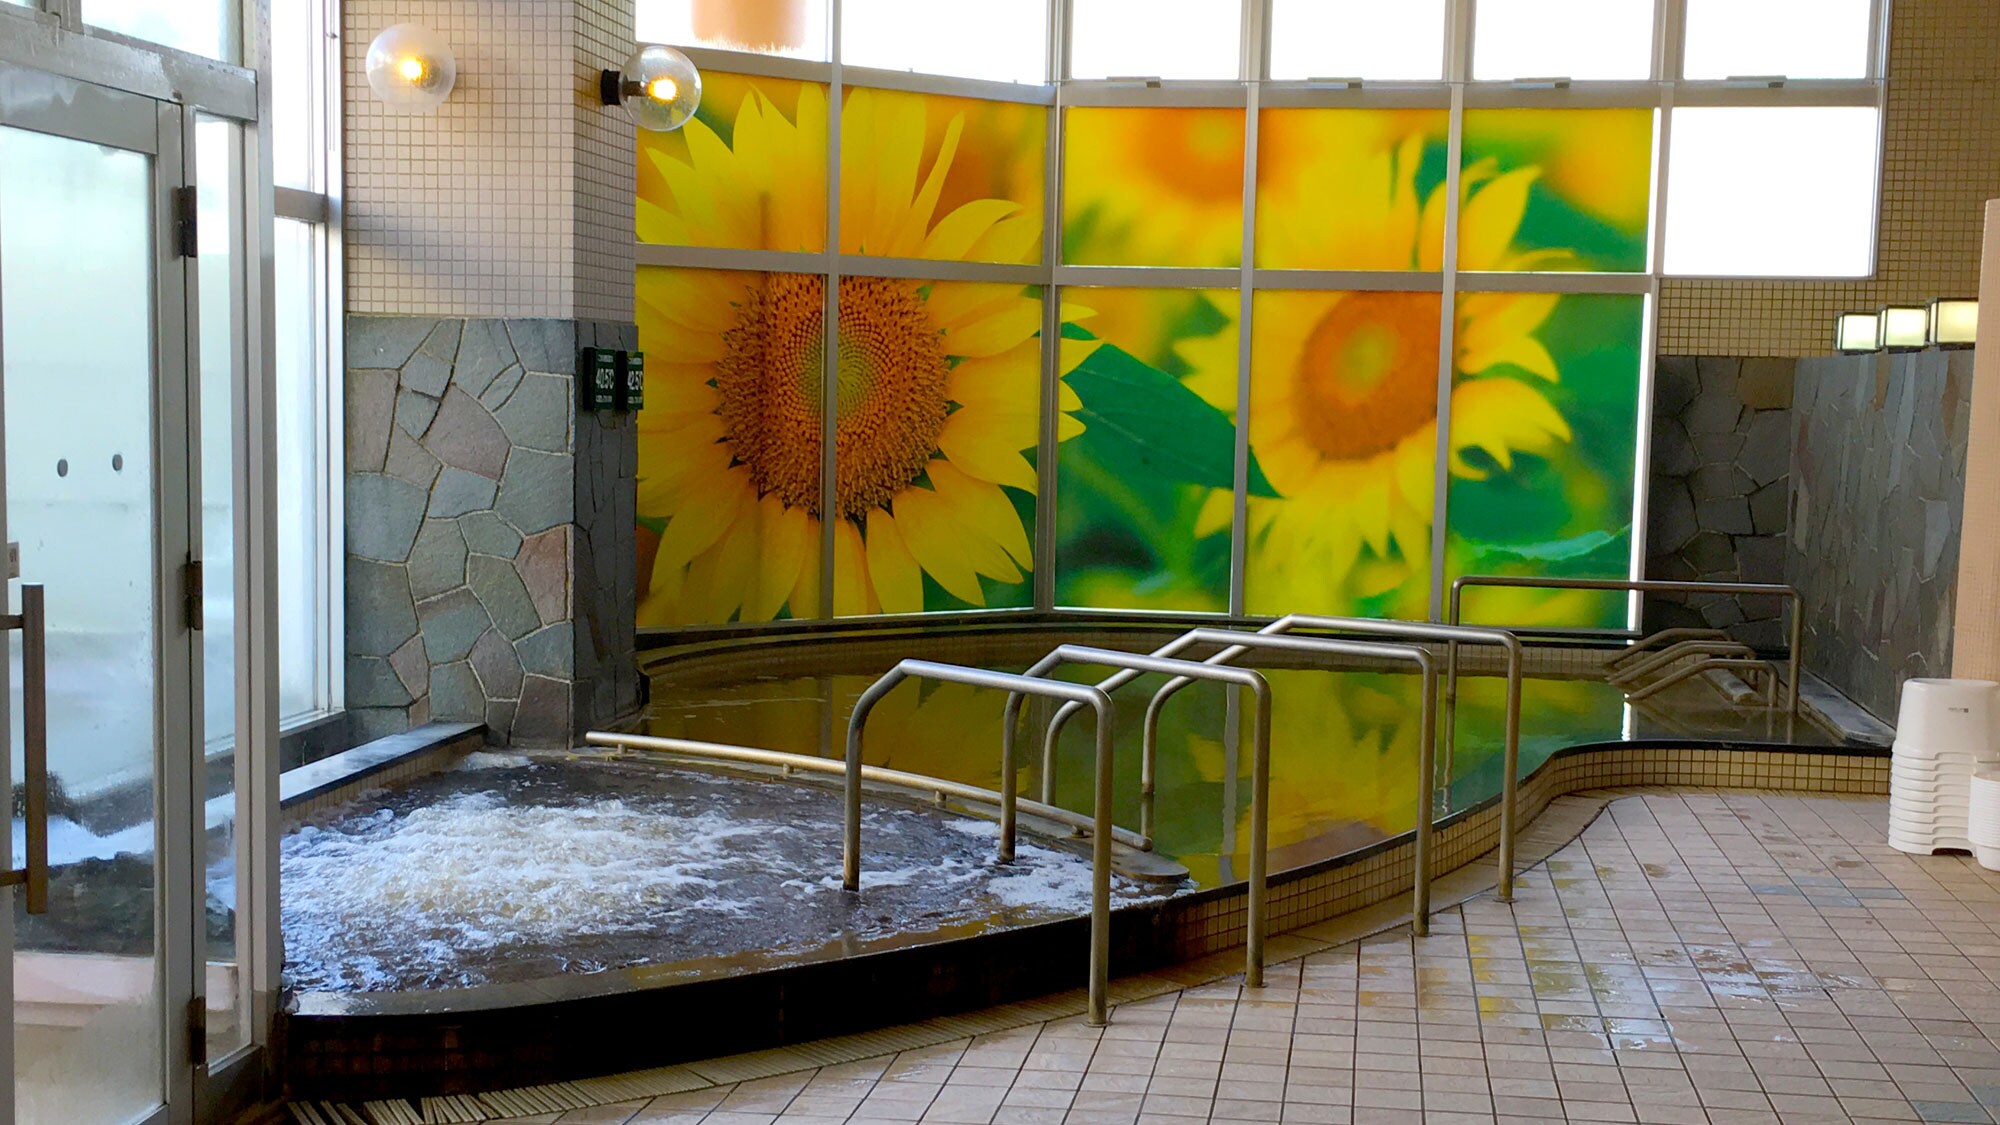 Hot spring facility "cradle" large communal bath